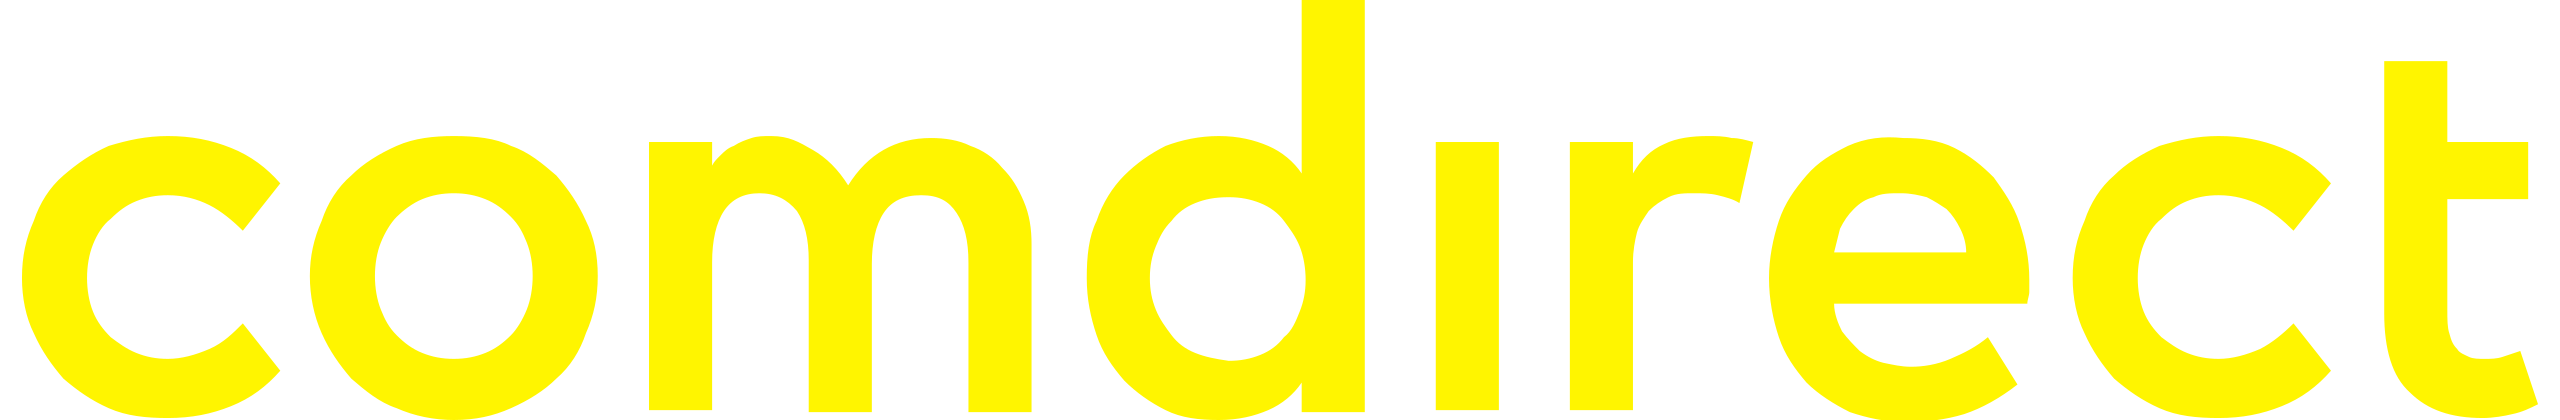 Comdirect logo